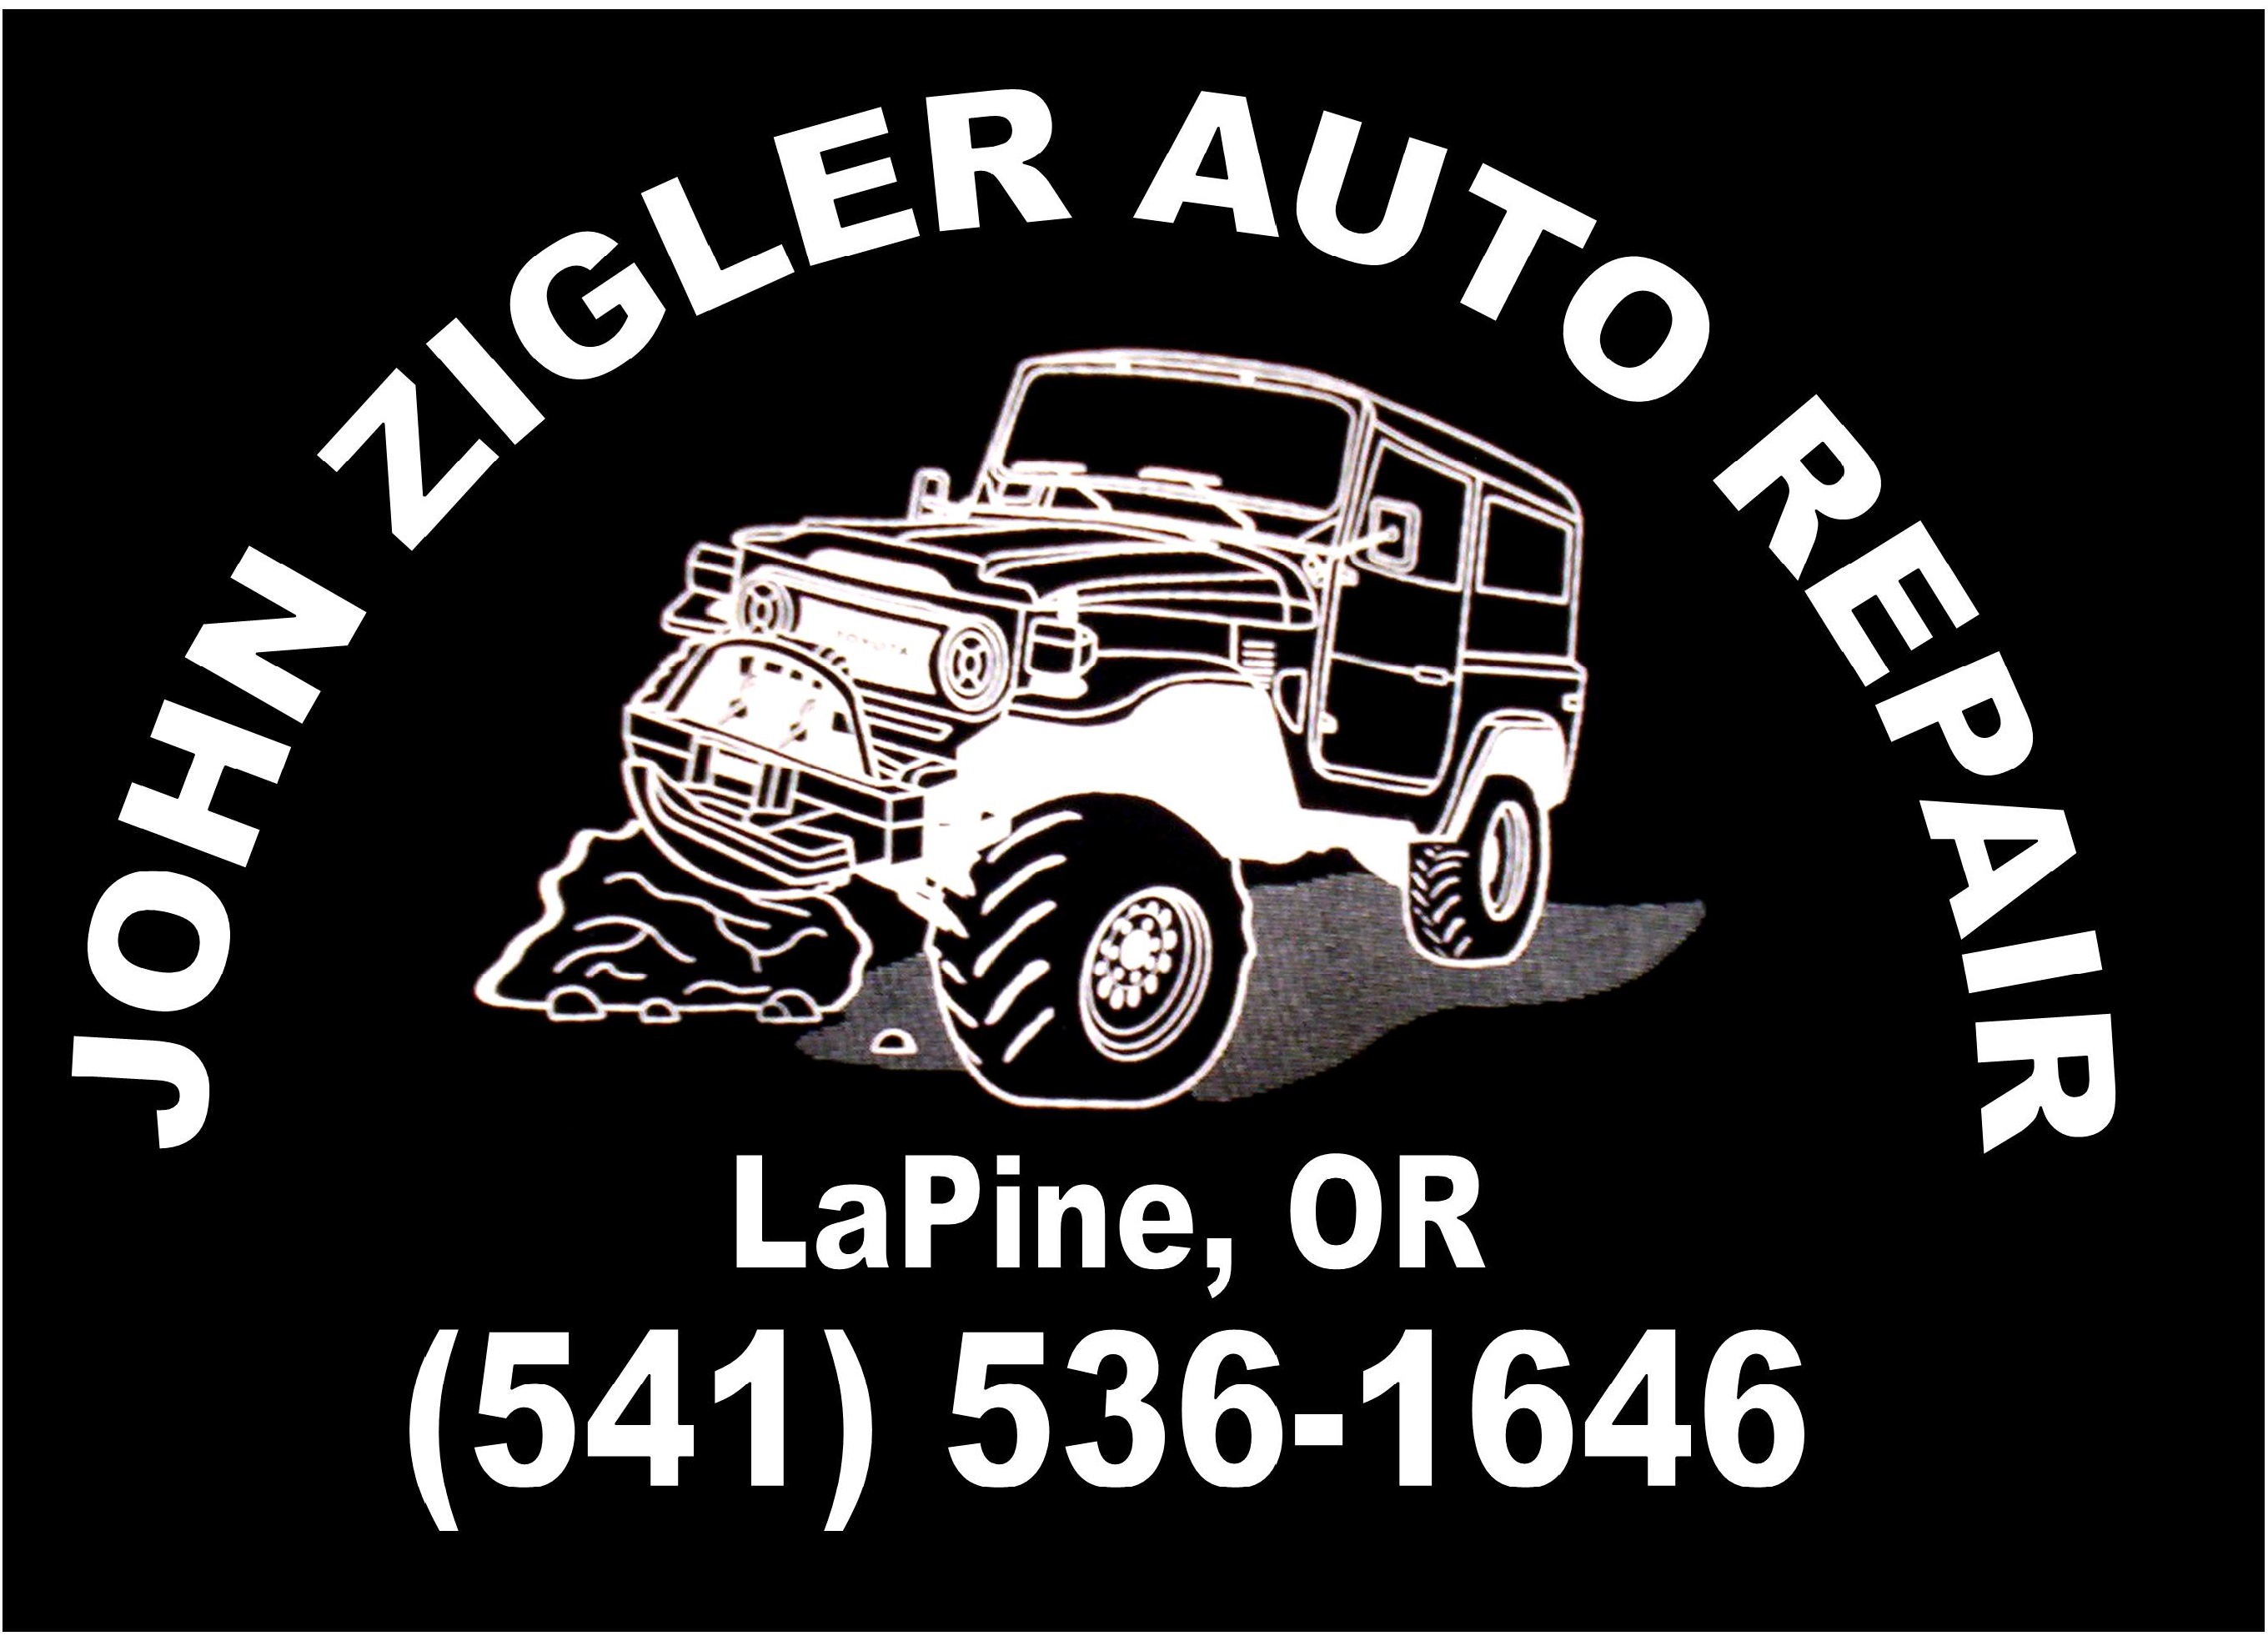 Zigler Automotive LaPine